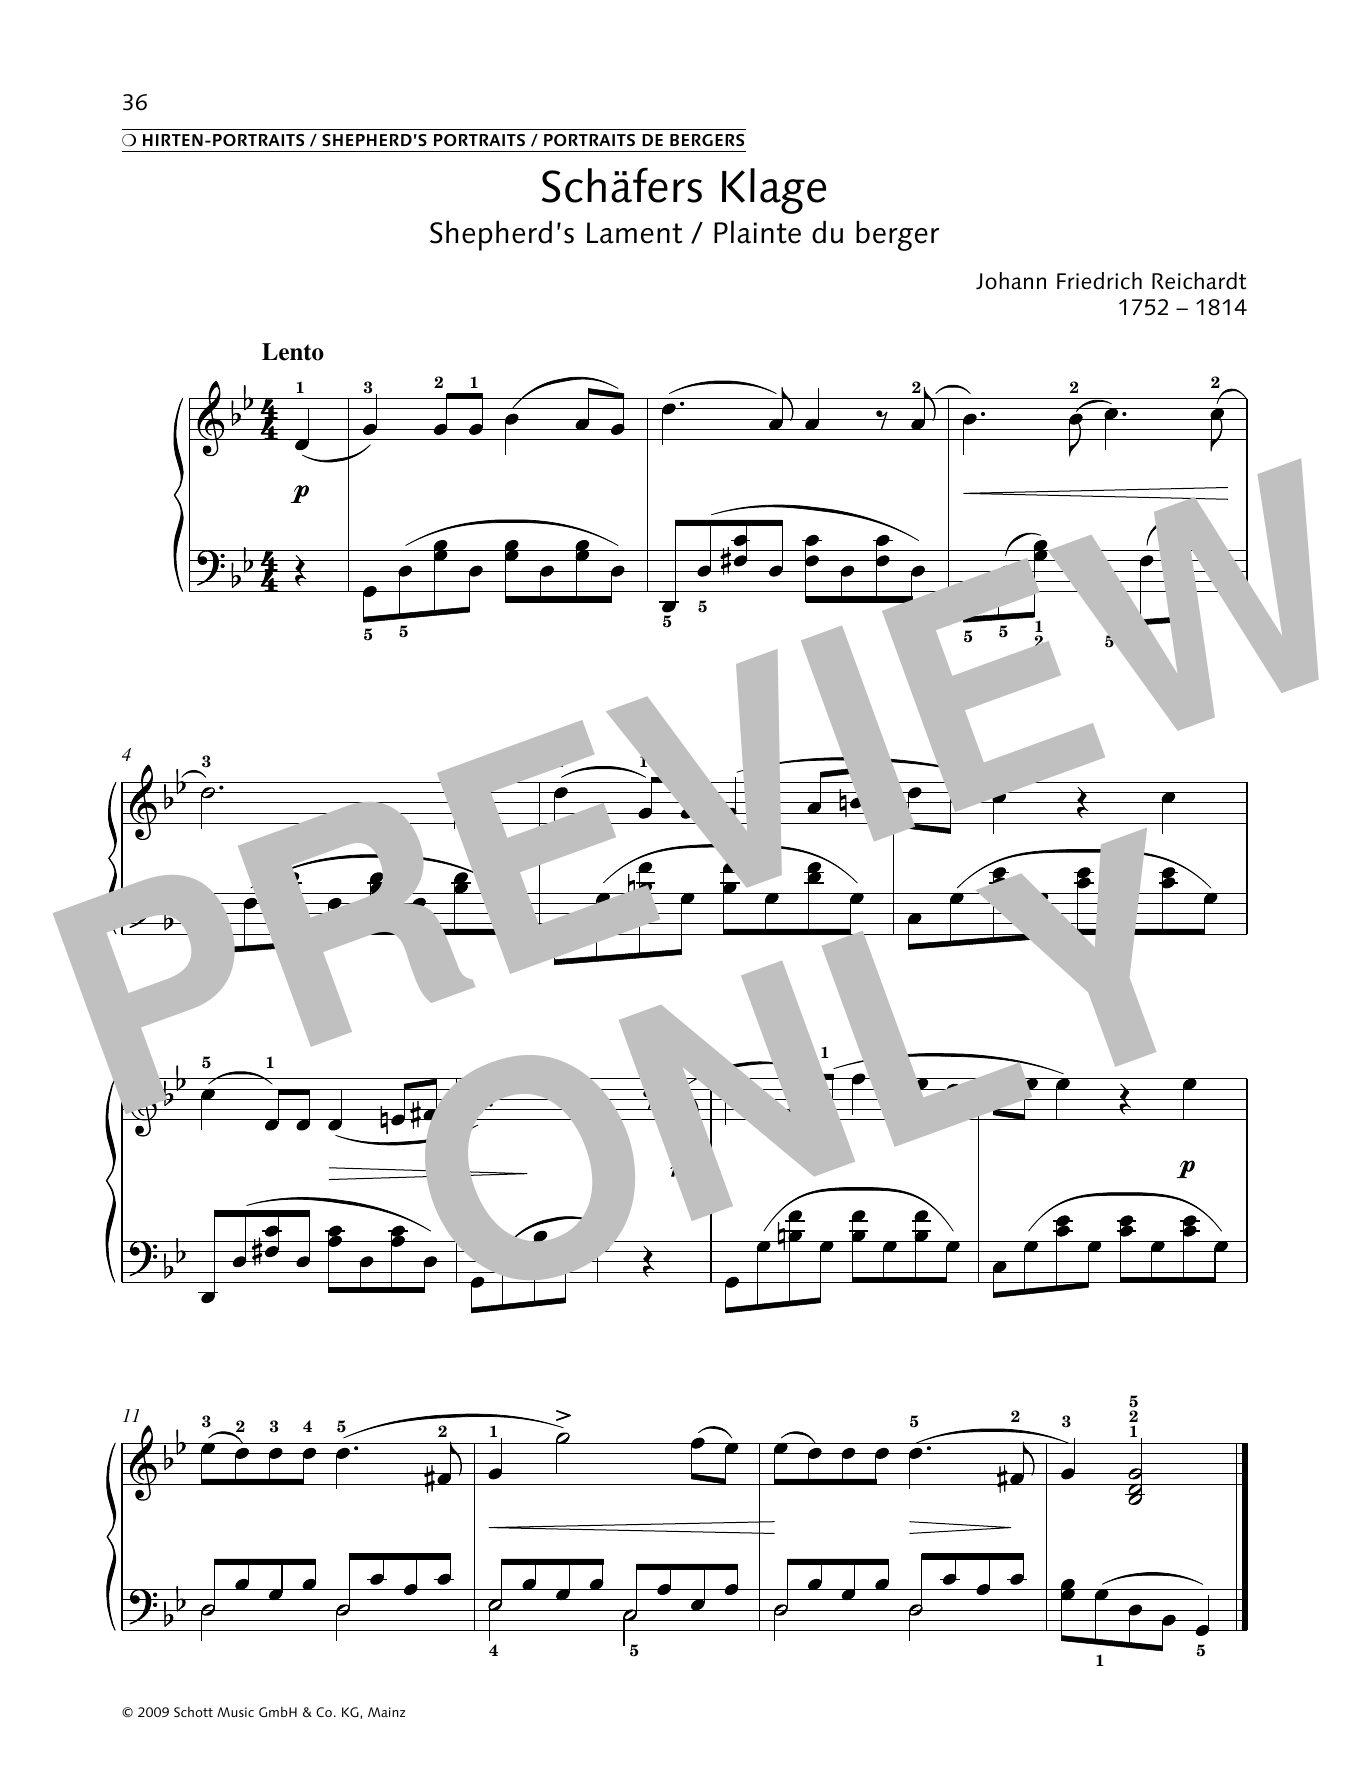 Johann Friedrich Reichardt Shepherd's Lament Sheet Music Notes & Chords for Piano Solo - Download or Print PDF